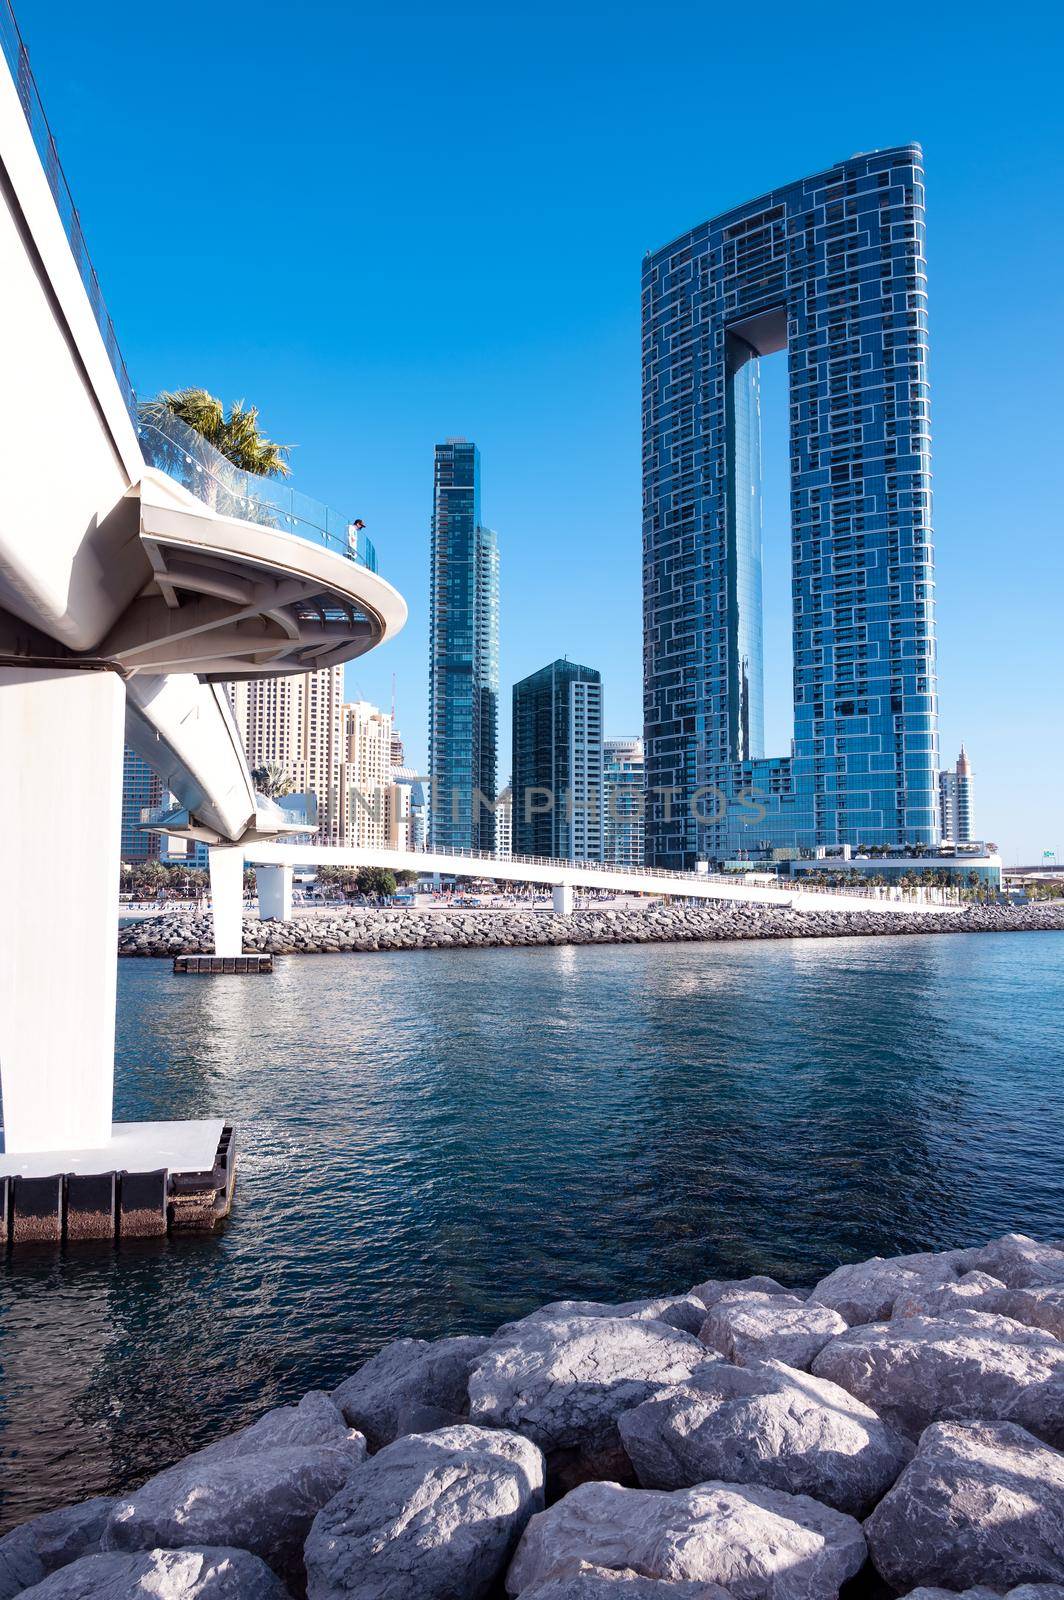 Jan 22, 2021, Dubai,UAE. Beautiful view of the Blue water residences and skyscrapers and the wharf bridge captured from the Ain Dubai, Blue water islands, Dubai , UAE.